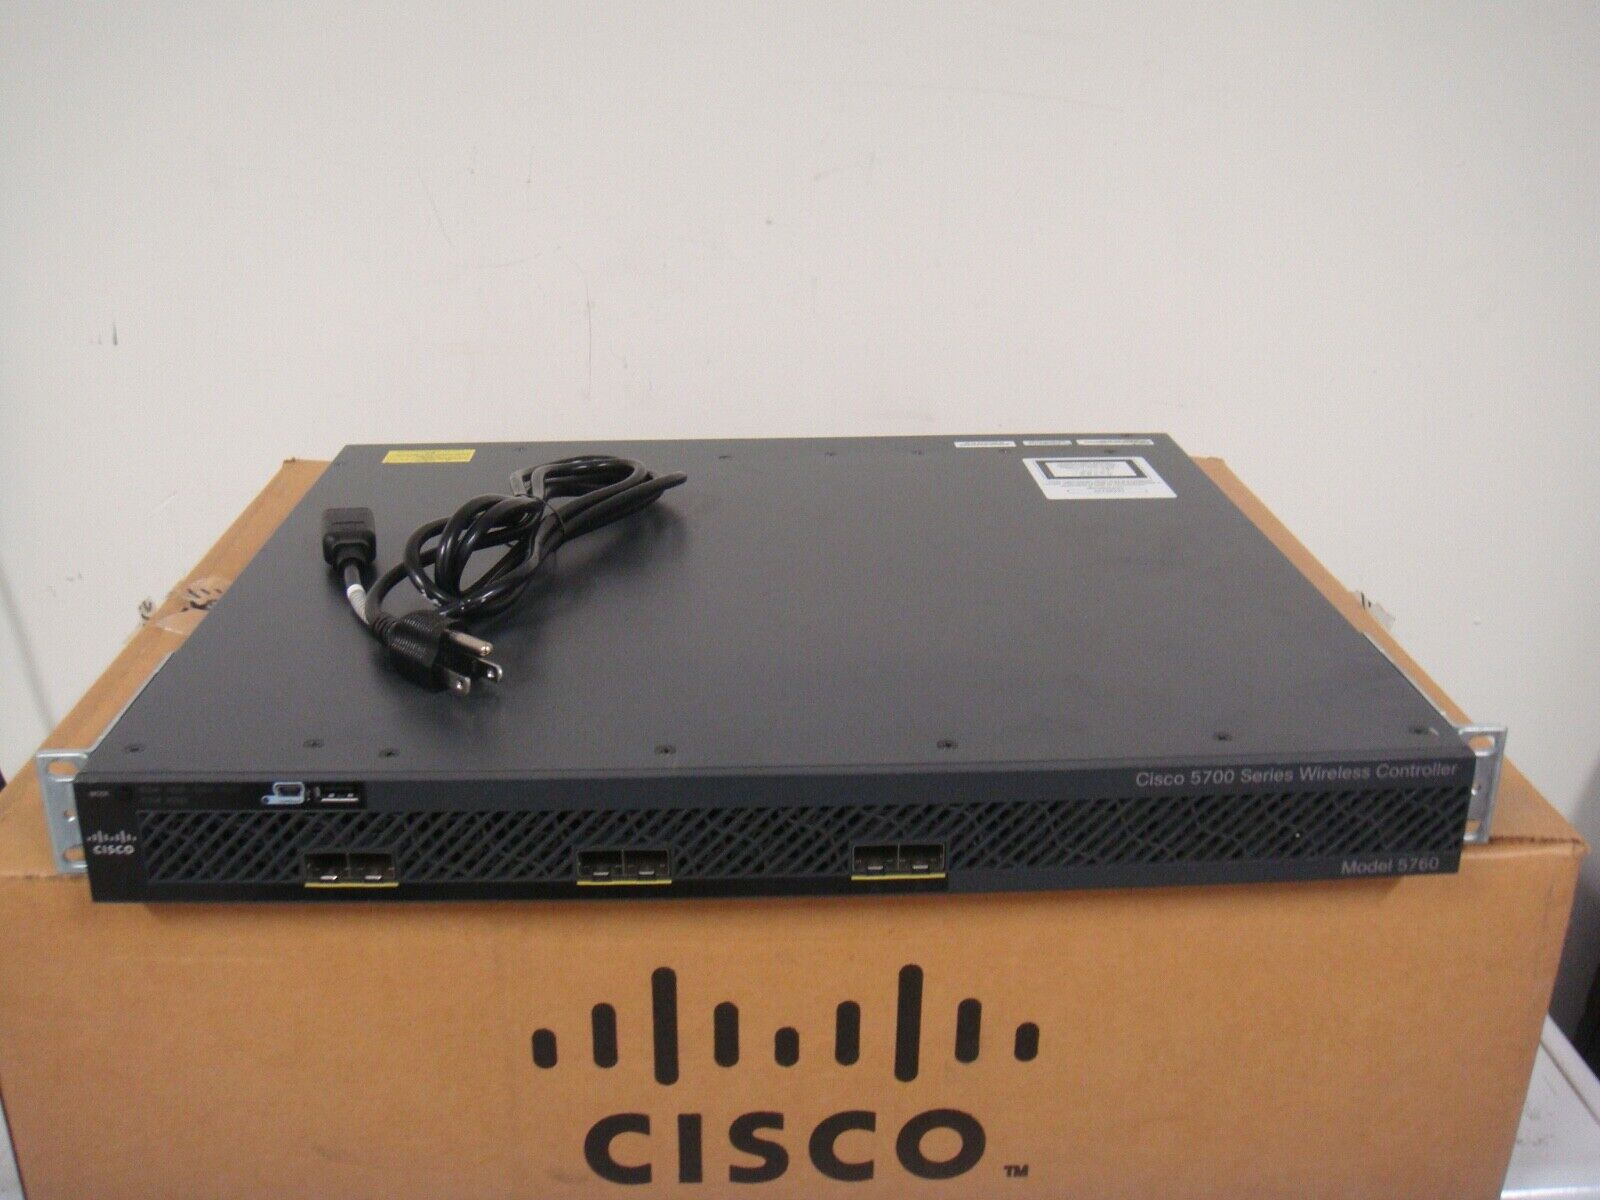 Cisco AIR-CT5760-HA-K9 5760 Series Wireless Controller Dual power supply